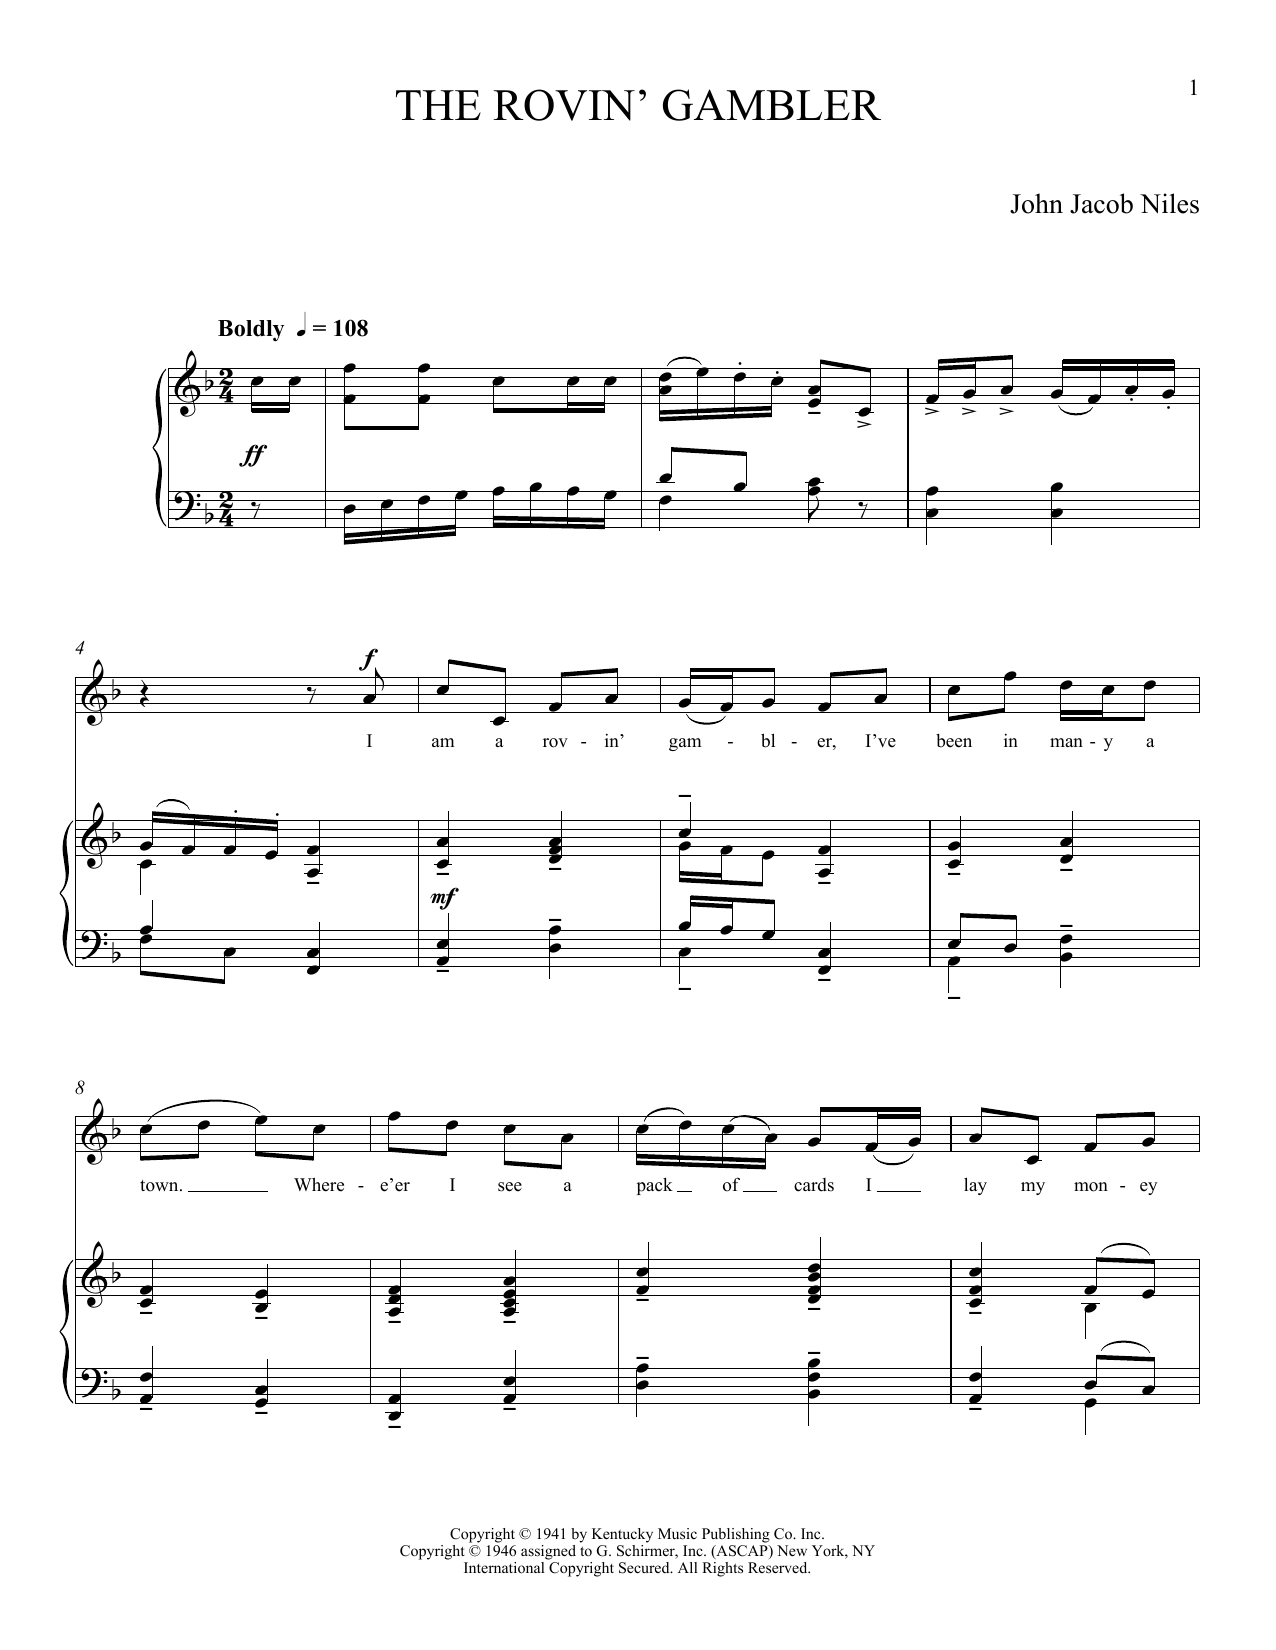 John Jacob Niles The Rovin' Gambler Sheet Music Notes & Chords for Piano & Vocal - Download or Print PDF